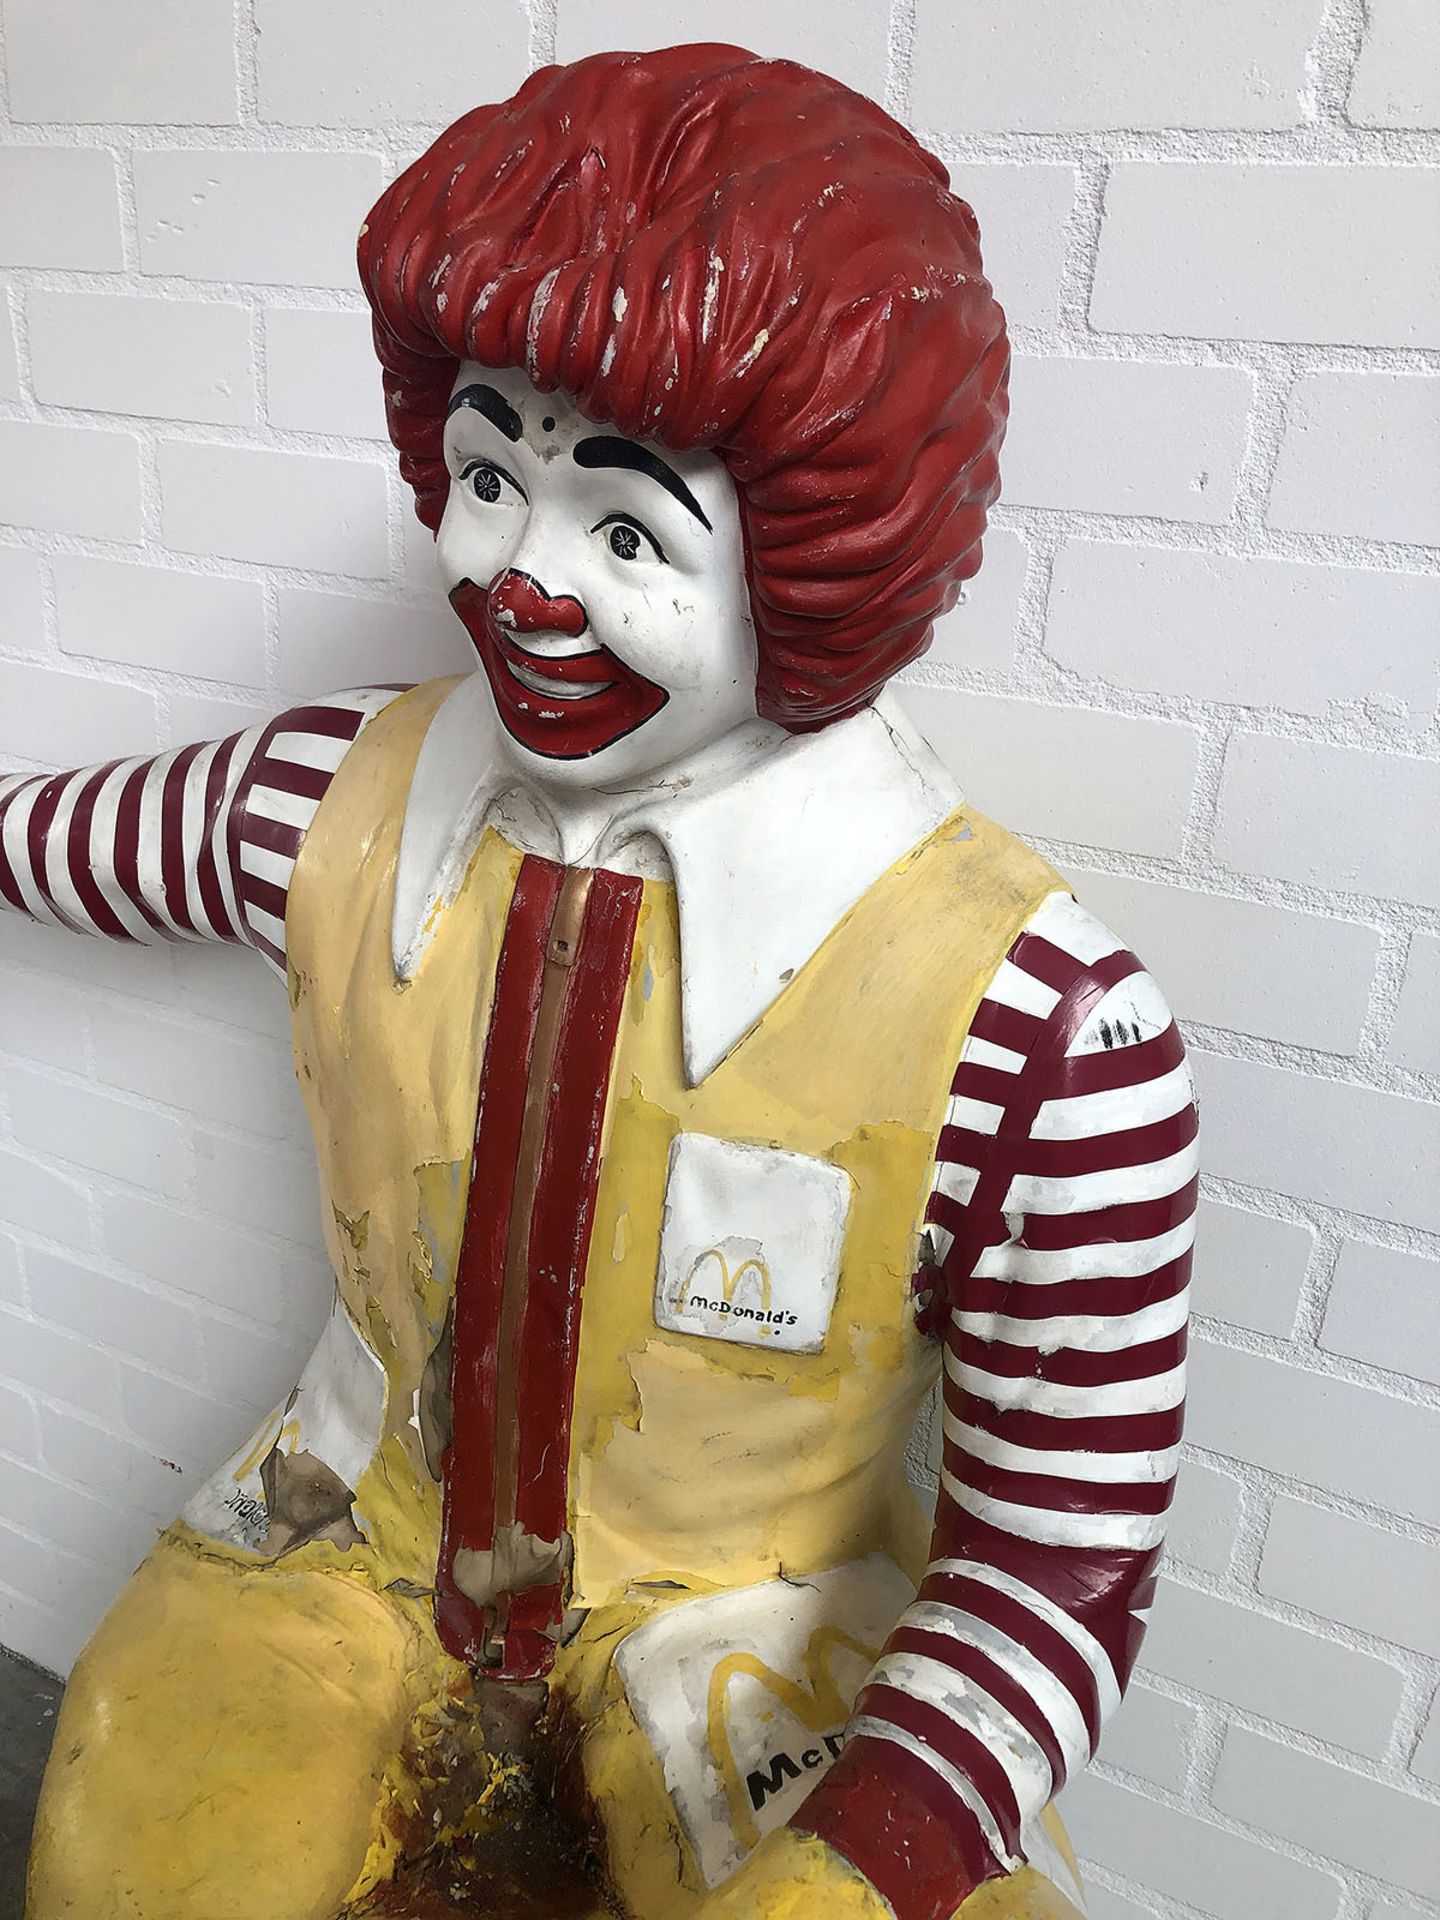 Original Lifesize Seated Ronald McDonald Clown Statue - Image 3 of 10